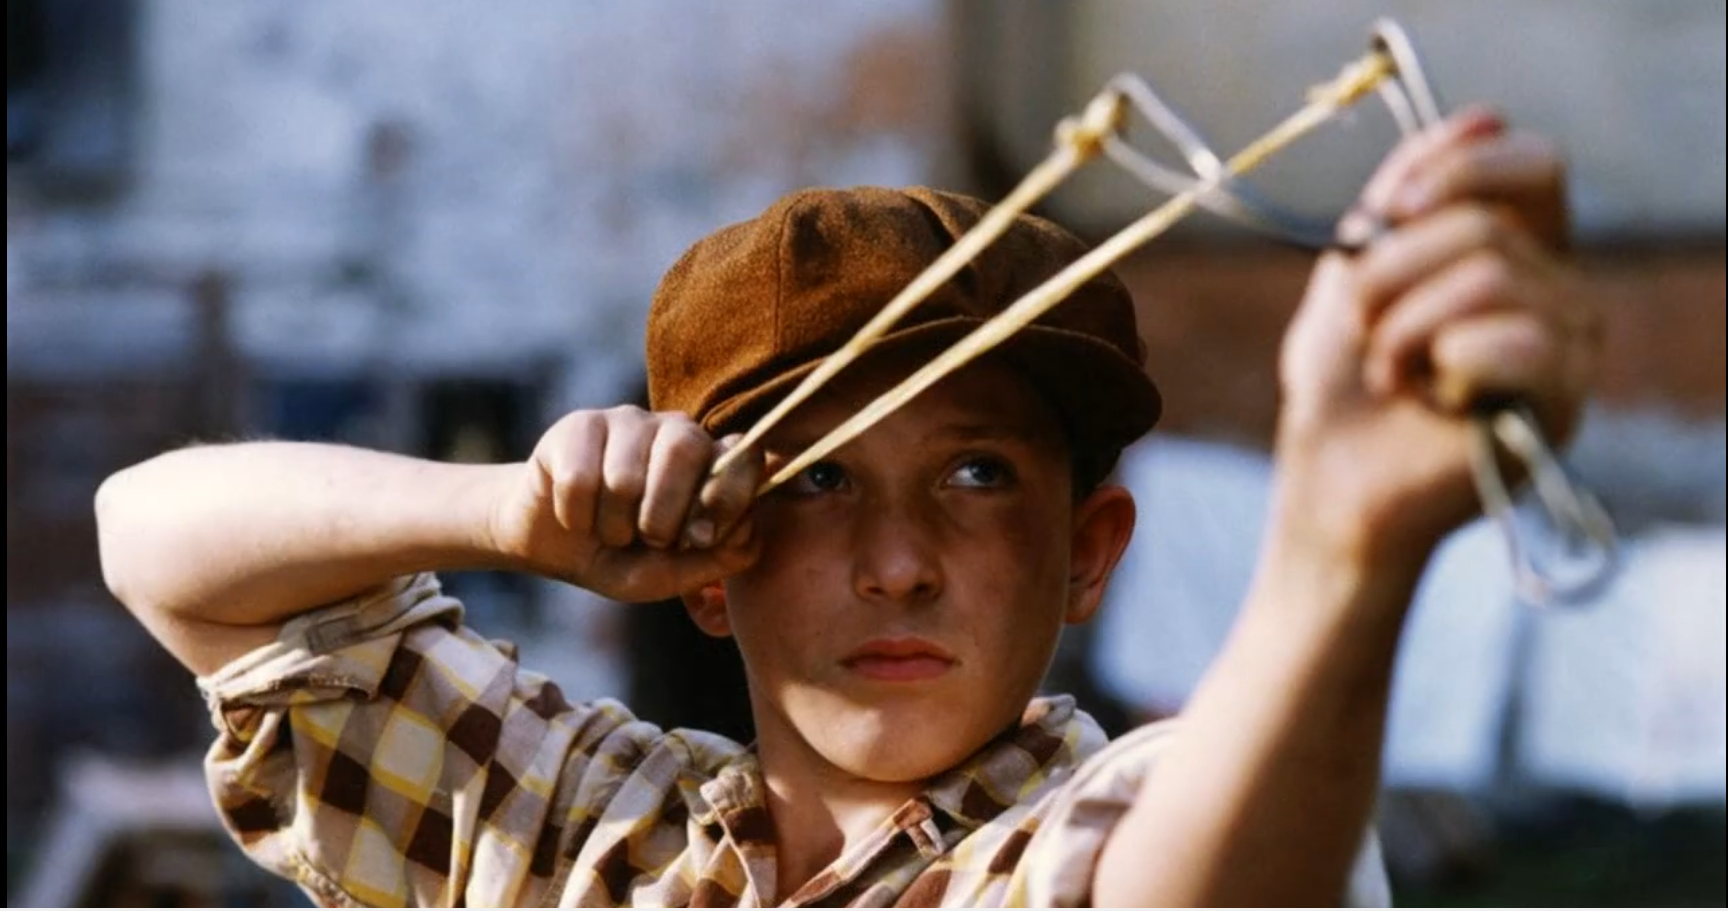 Рогатка Kådisbellan, 1993. Мальчик с рогаткой. Солдат с рогаткой. Пальчики шалуны